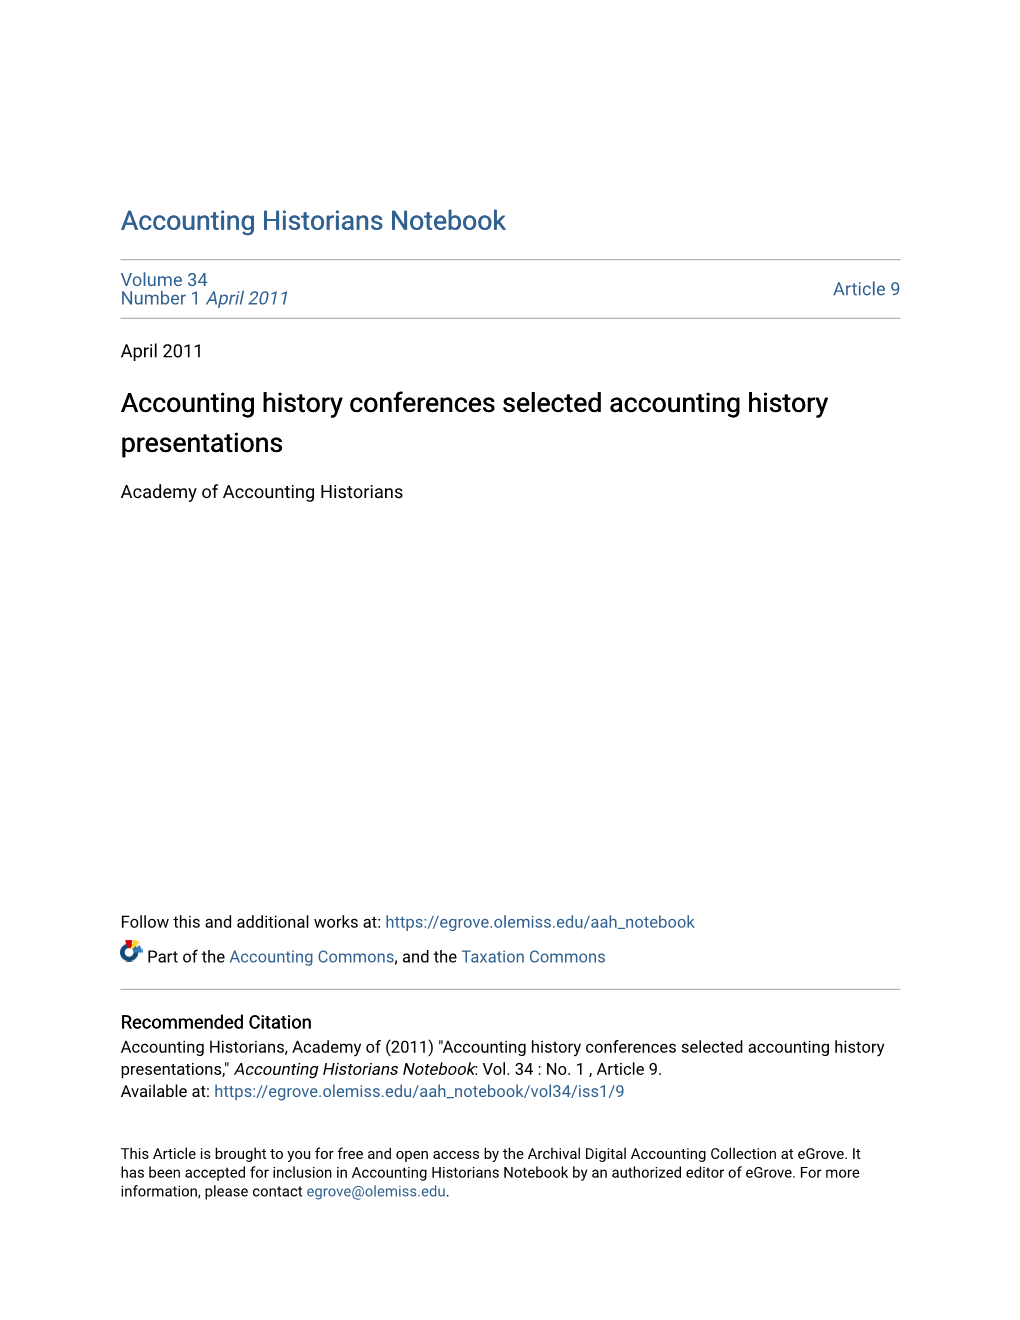 Accounting History Conferences Selected Accounting History Presentations